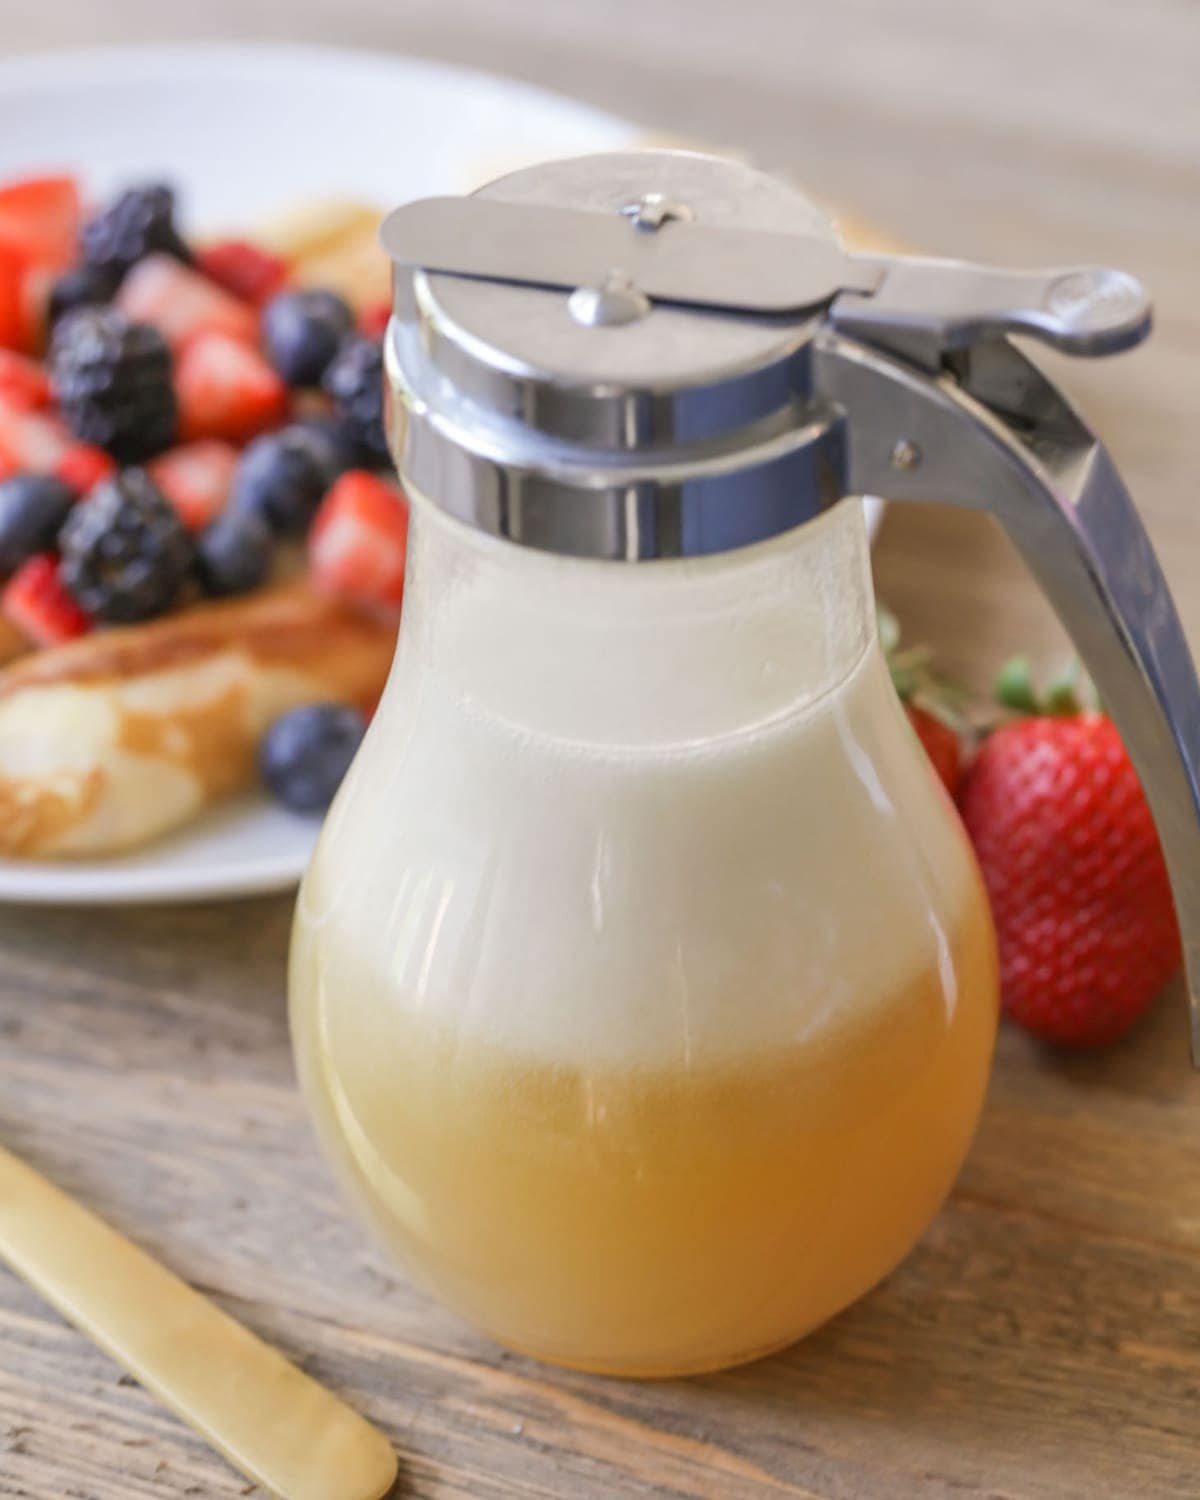 Homemade buttermilk syrup in a dispenser